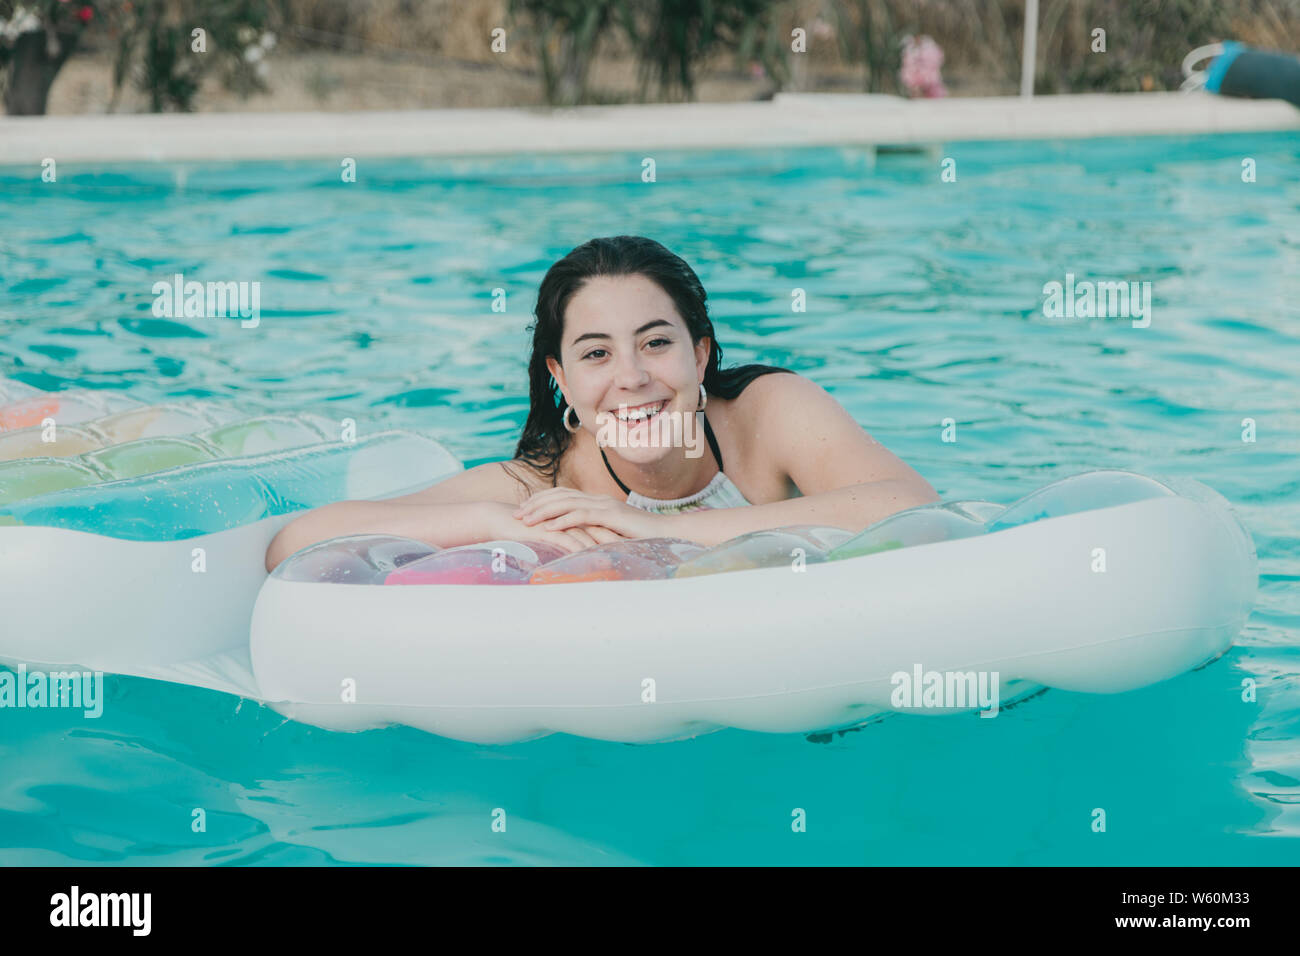 Chica alegre en una colchoneta inflable en el agua Fotografía de stock -  Alamy